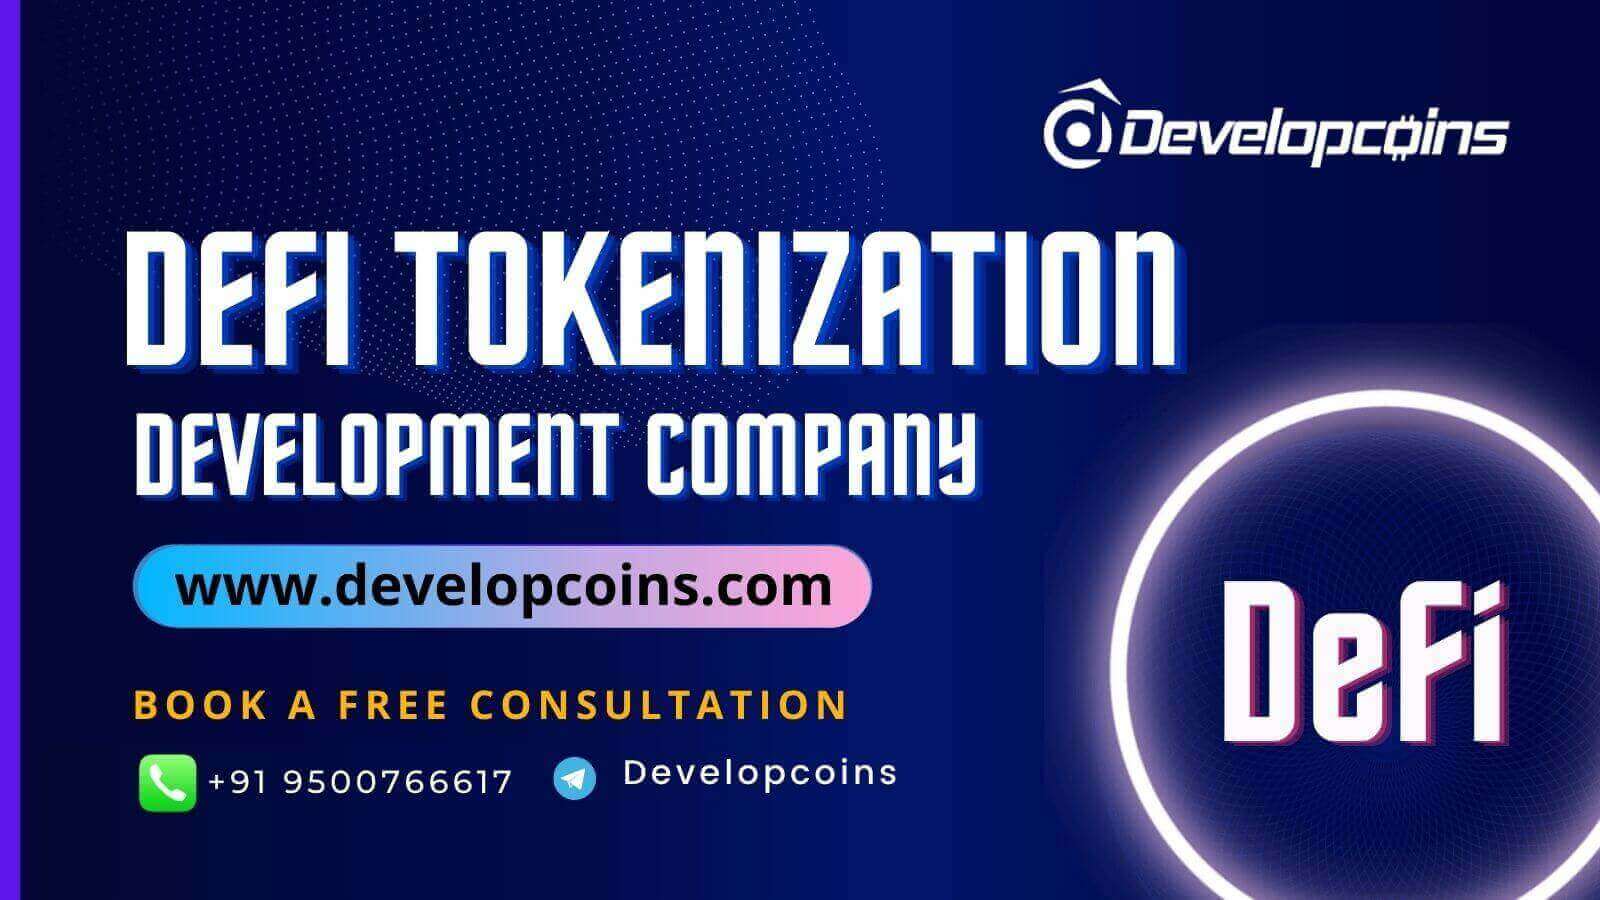 DeFi Tokenization Platform Development Company & Services